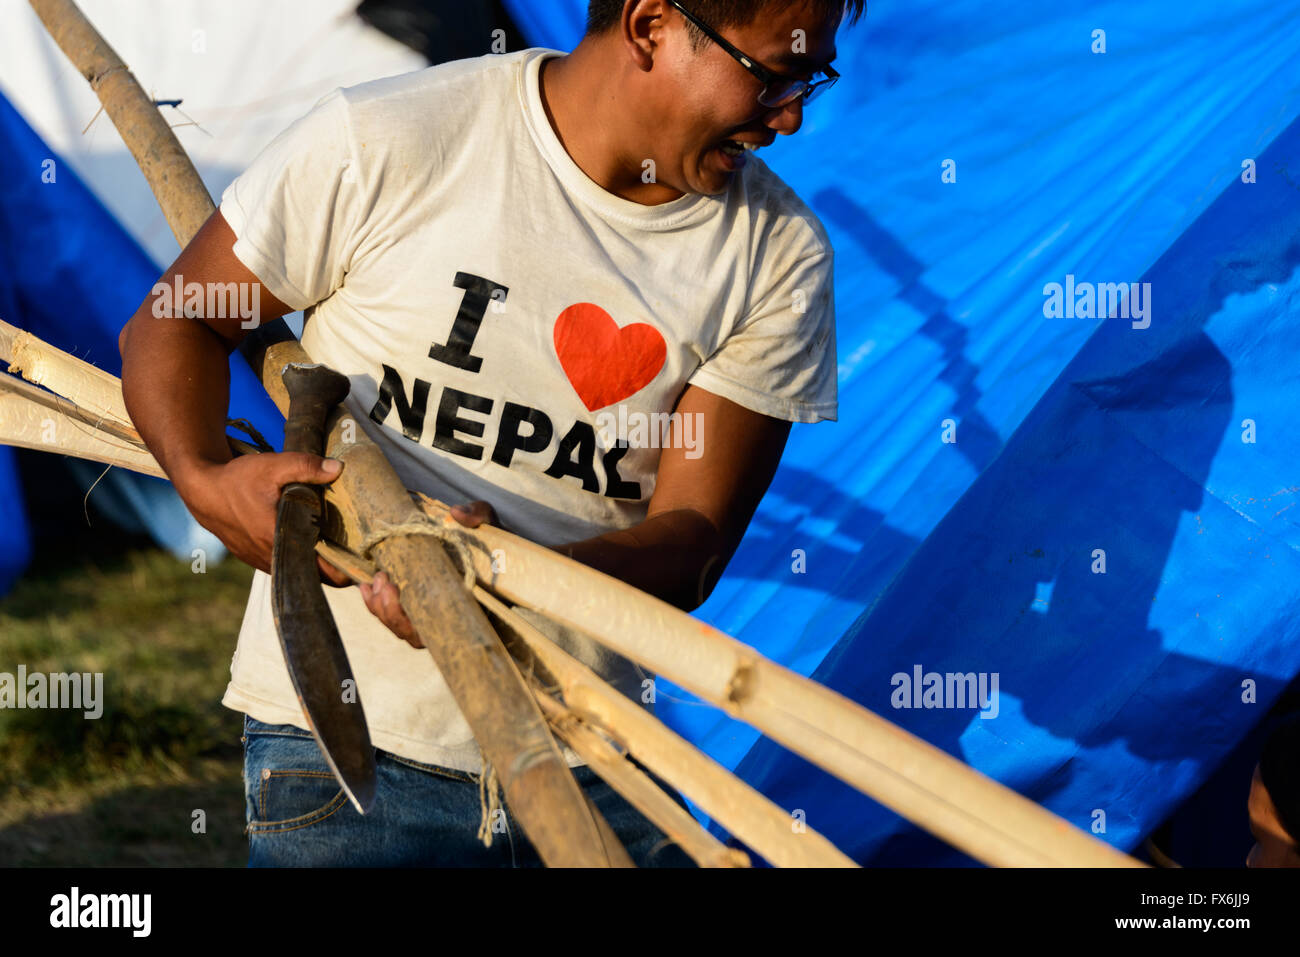 Kathmandu, Nepal - 12 May 2015: Man builds a tent in the Chuchepati area of Kathmandu, after the 7.3 magnitude earthquake. Stock Photo